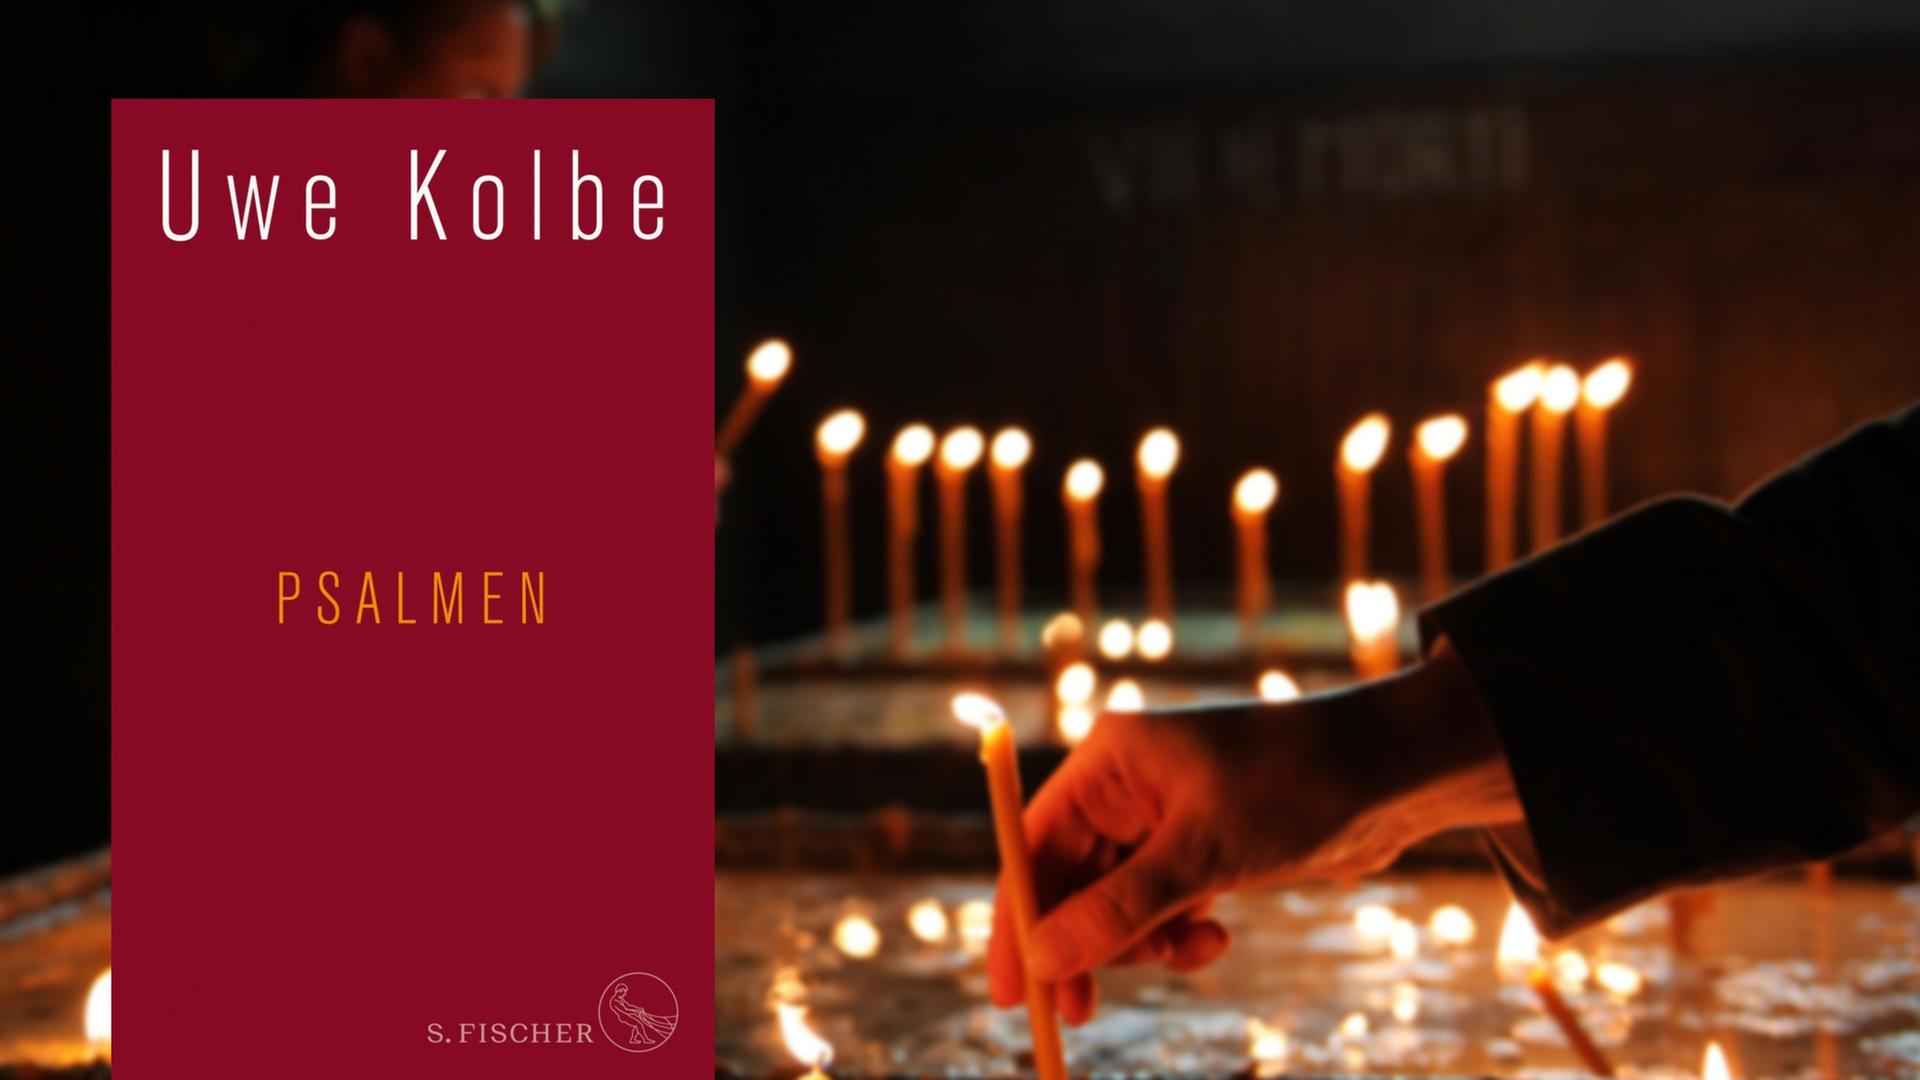 Buchcover: Uwe Kolbe "Psalmen"